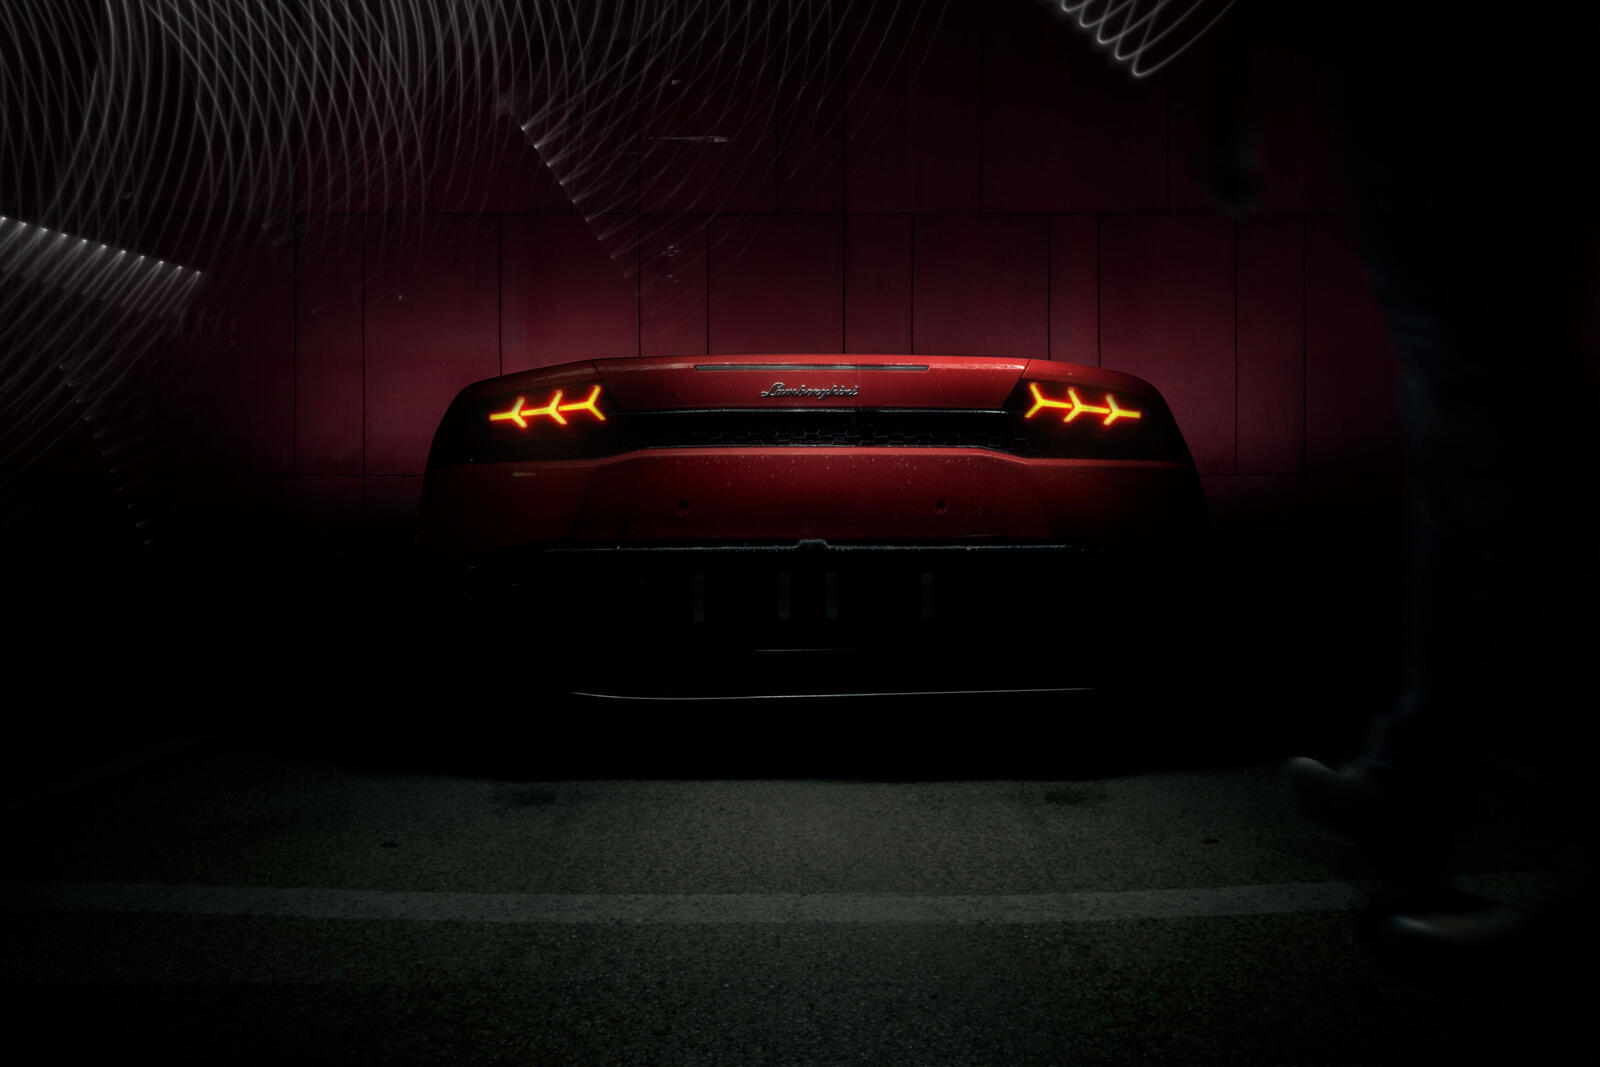 Wallpapers Lamborghini Huracan Behance cars on the desktop